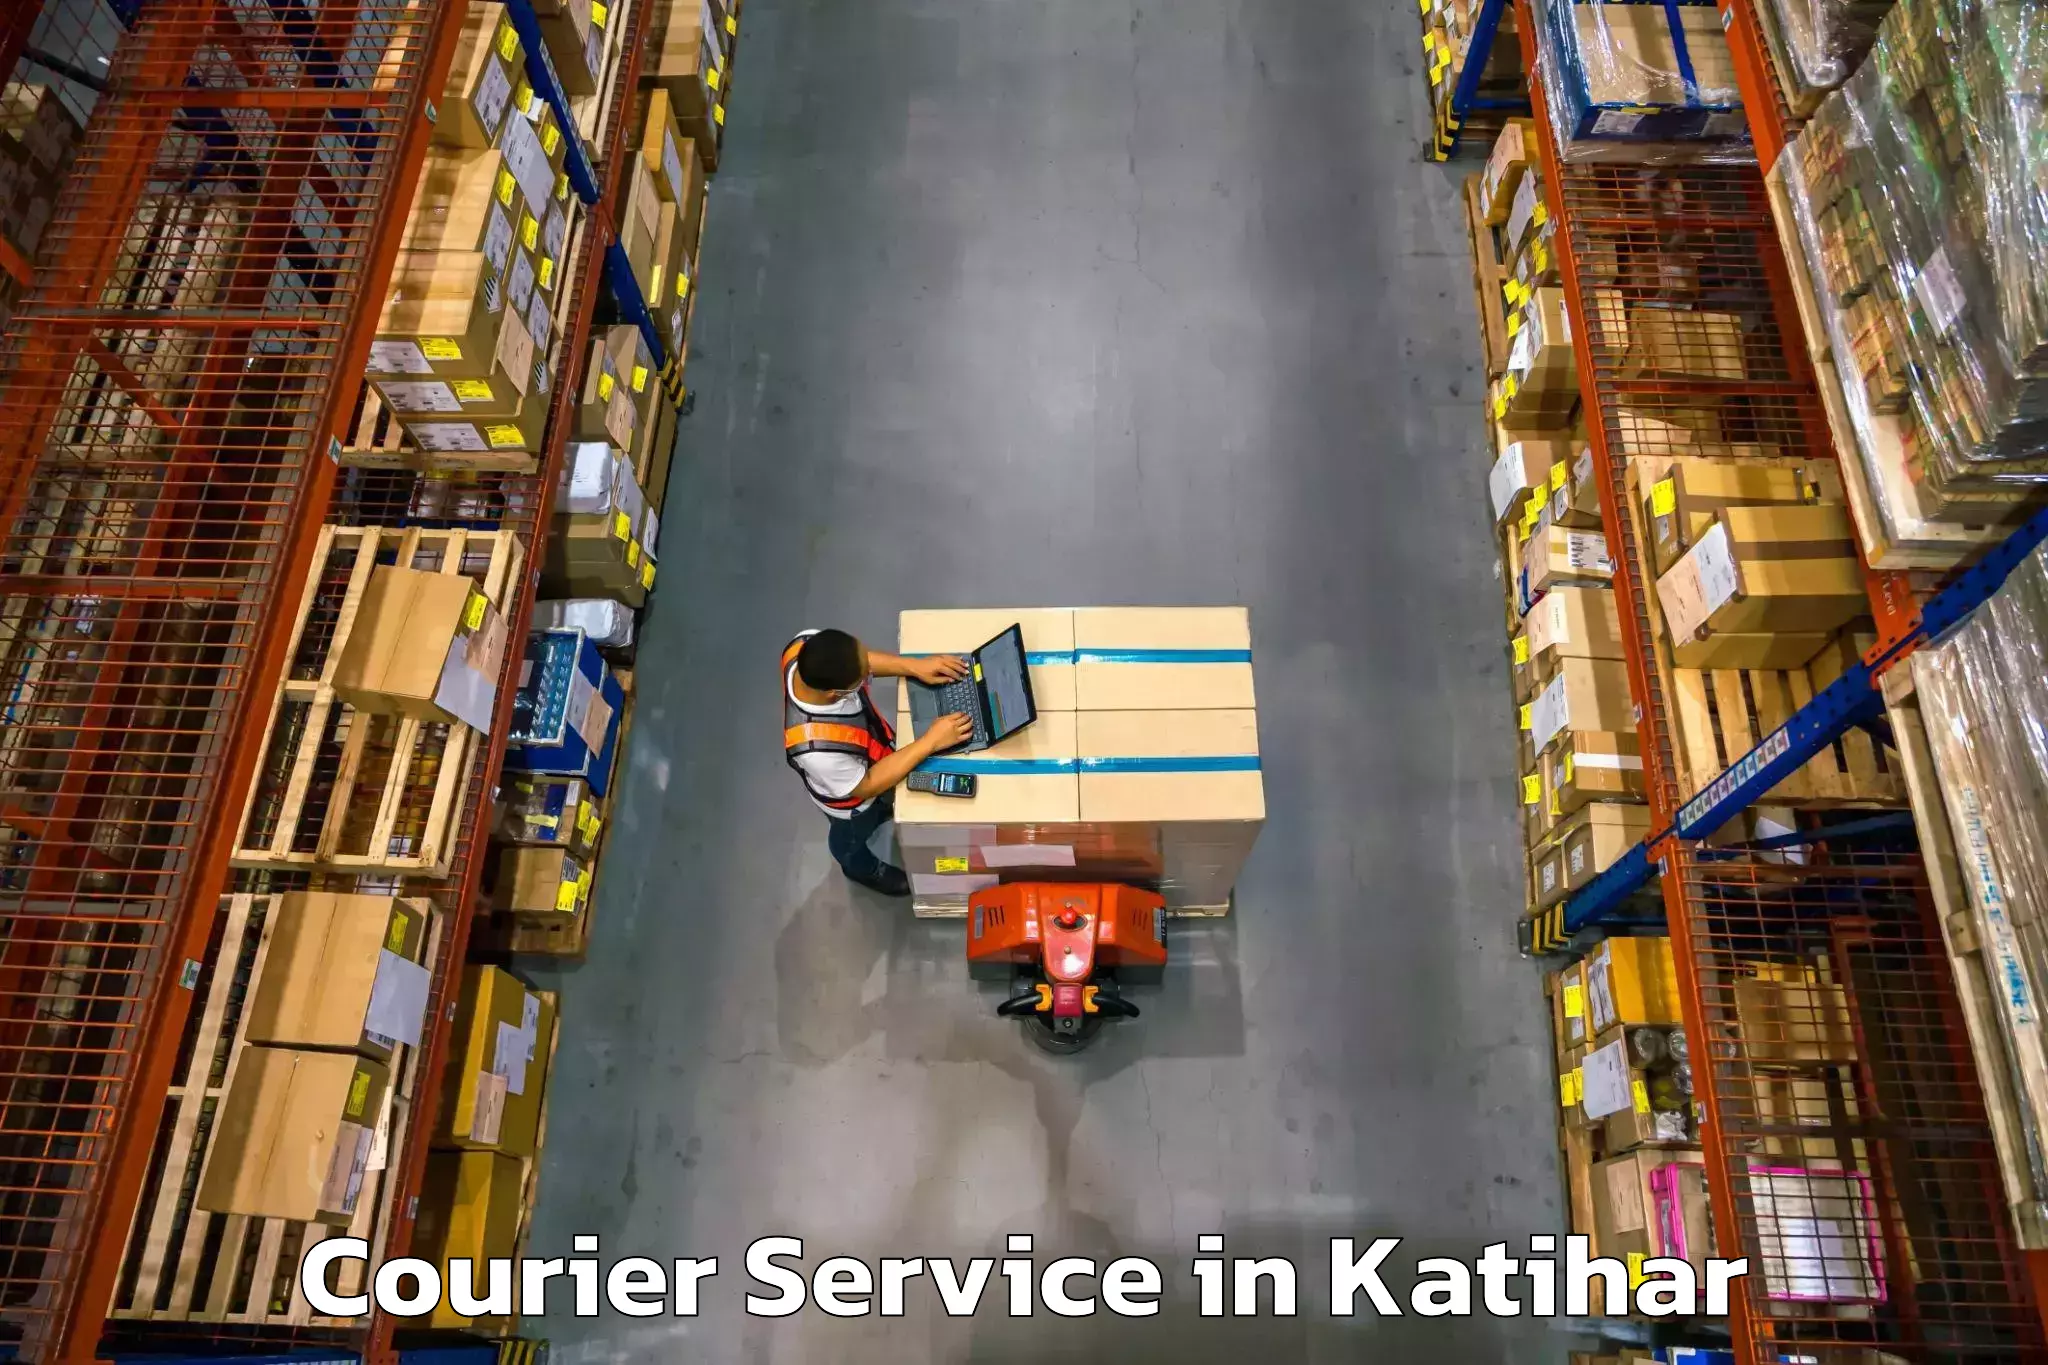 Advanced logistics management in Katihar